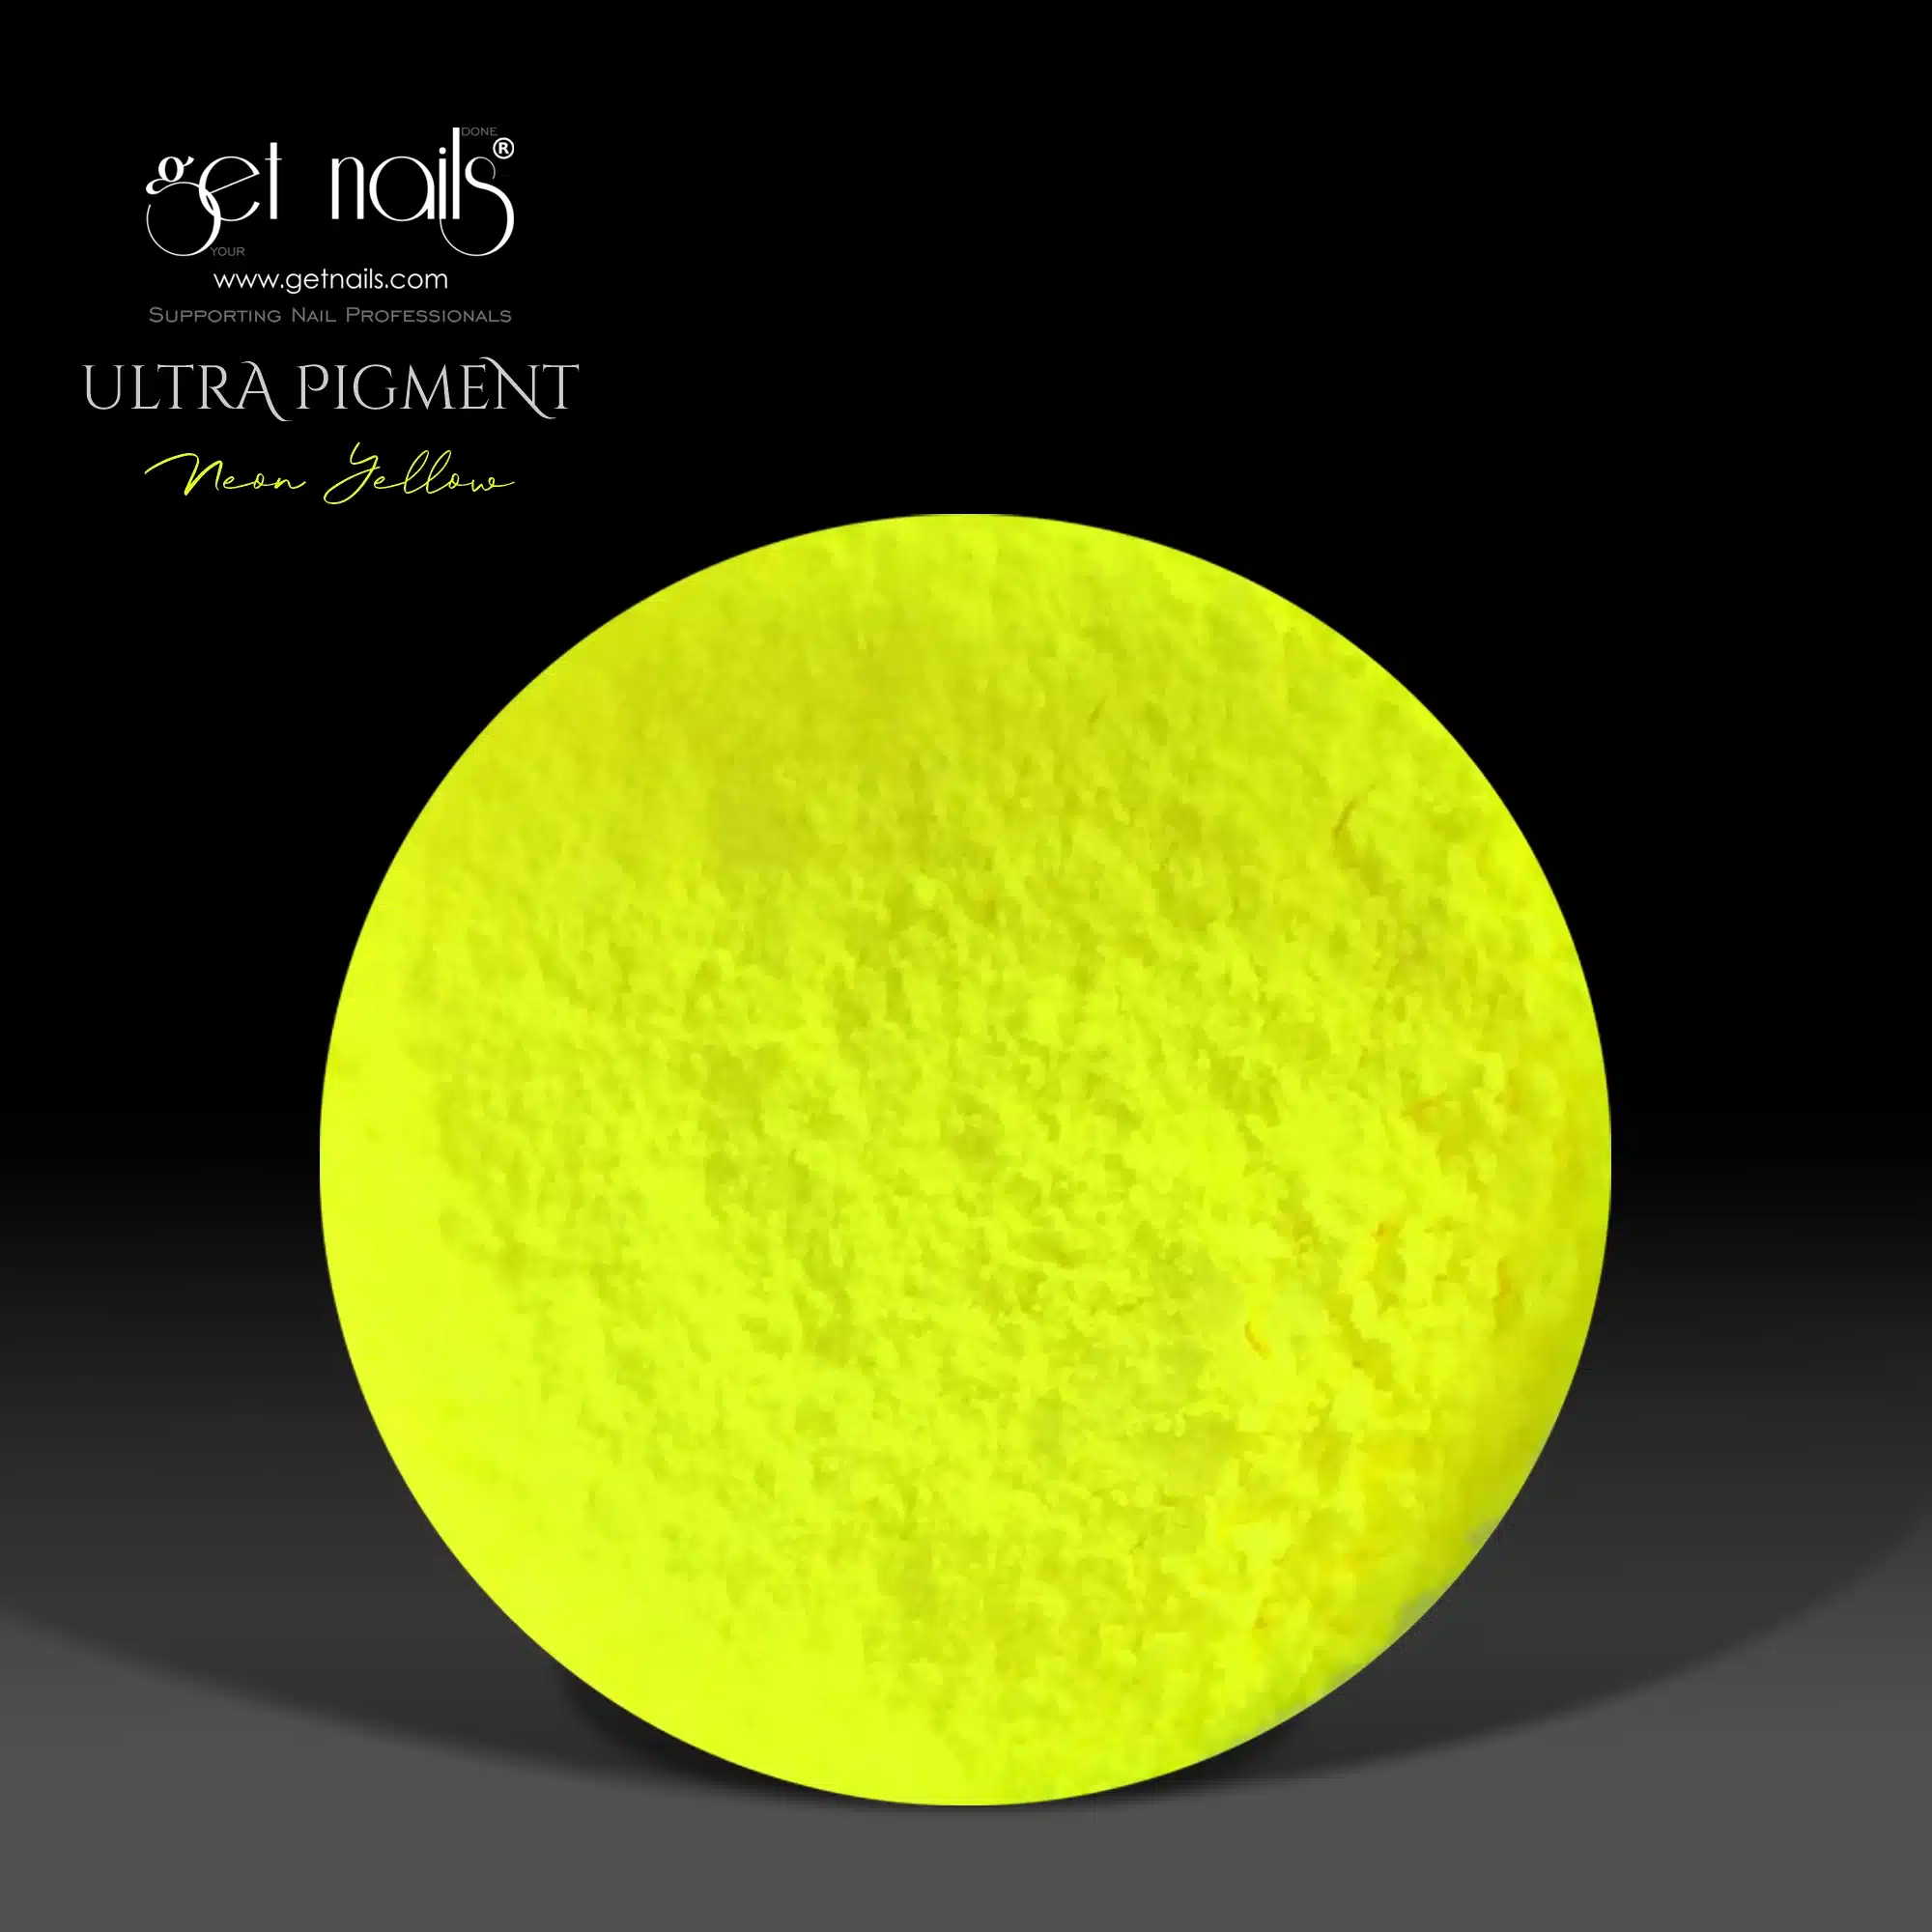 Get Nails Austria - Ultra Pigment Neon Yellow 1.5g